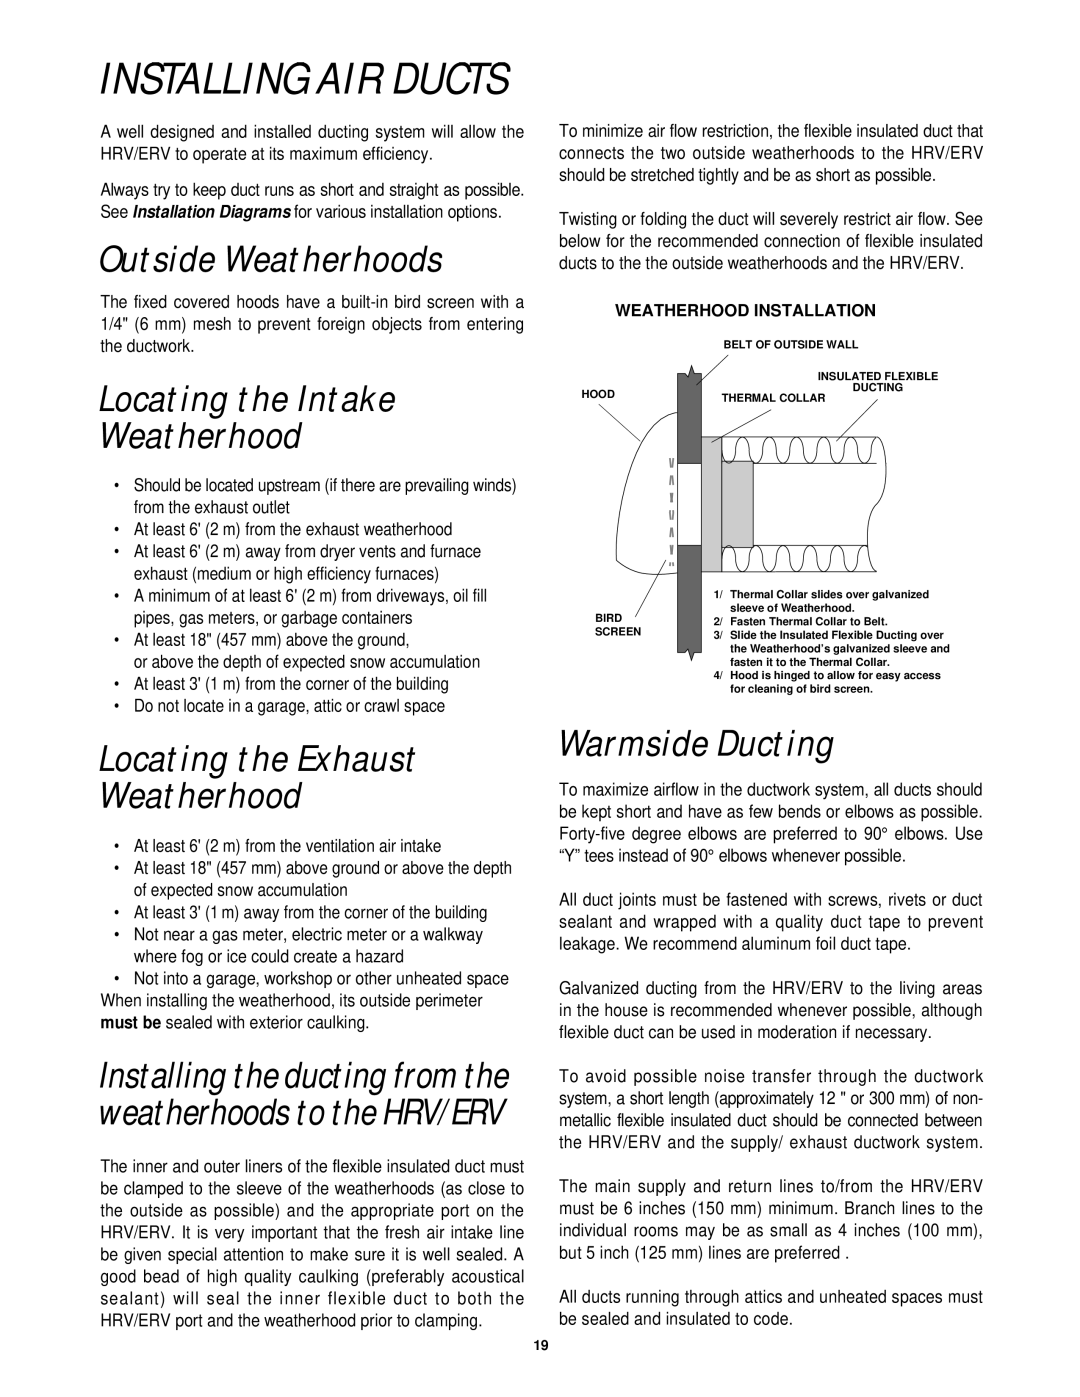 Lifebreath 95MAX, 200MAX Installing Air Ducts, Outside Weatherhoods, Locating the Intake Weatherhood, Warmside Ducting 